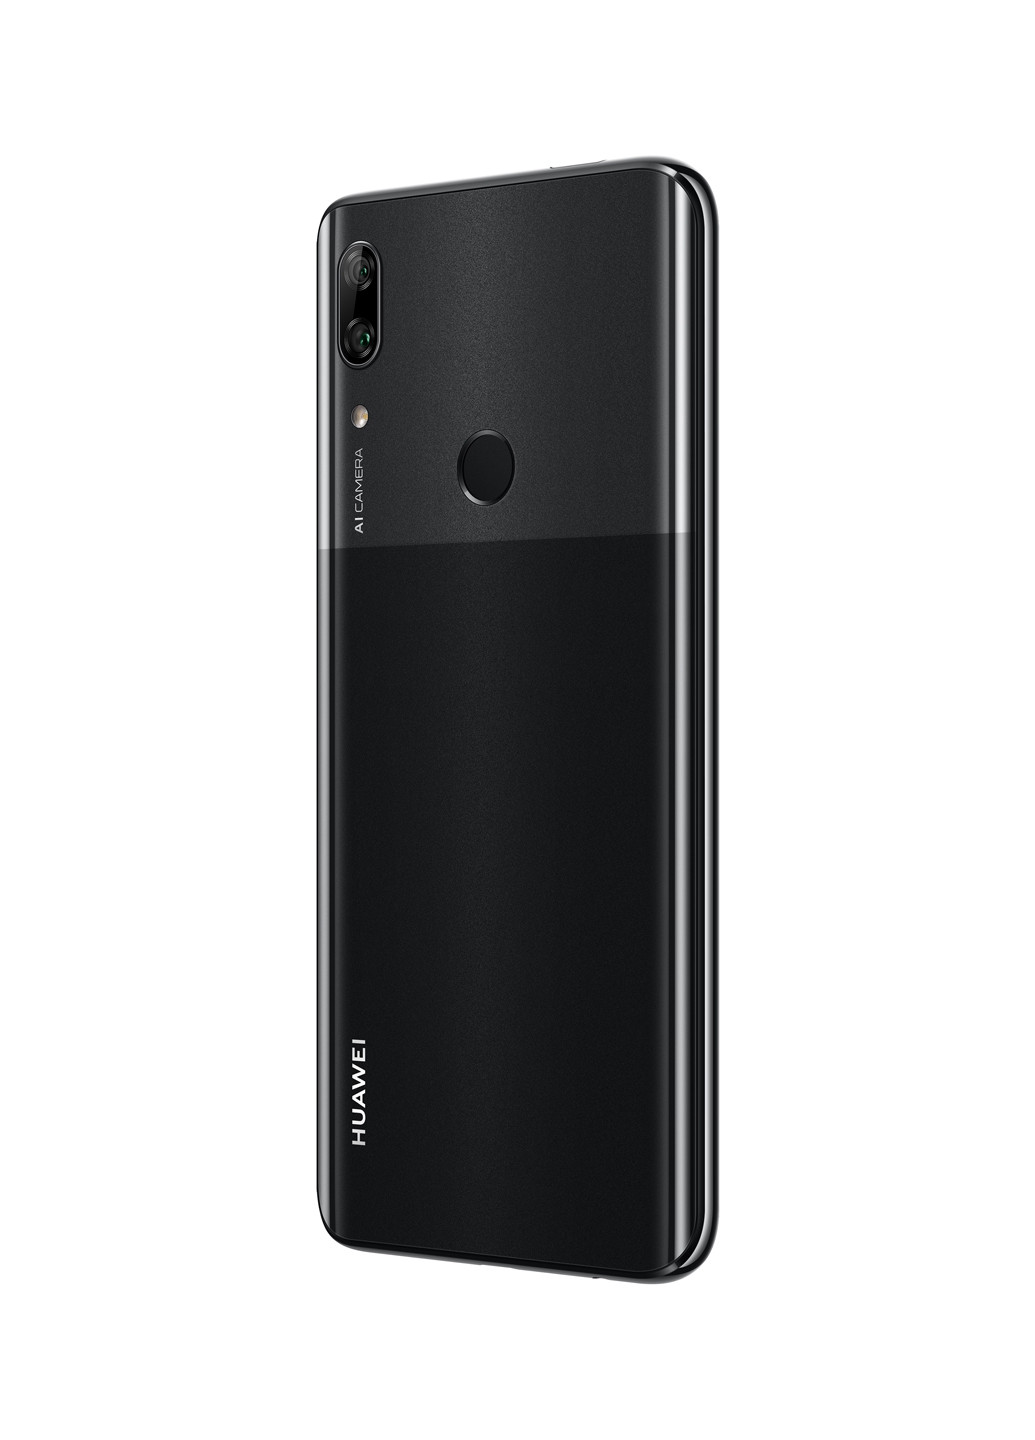 Смартфон Huawei p smart z 4/64gb black (stk-lx1) (135191296)